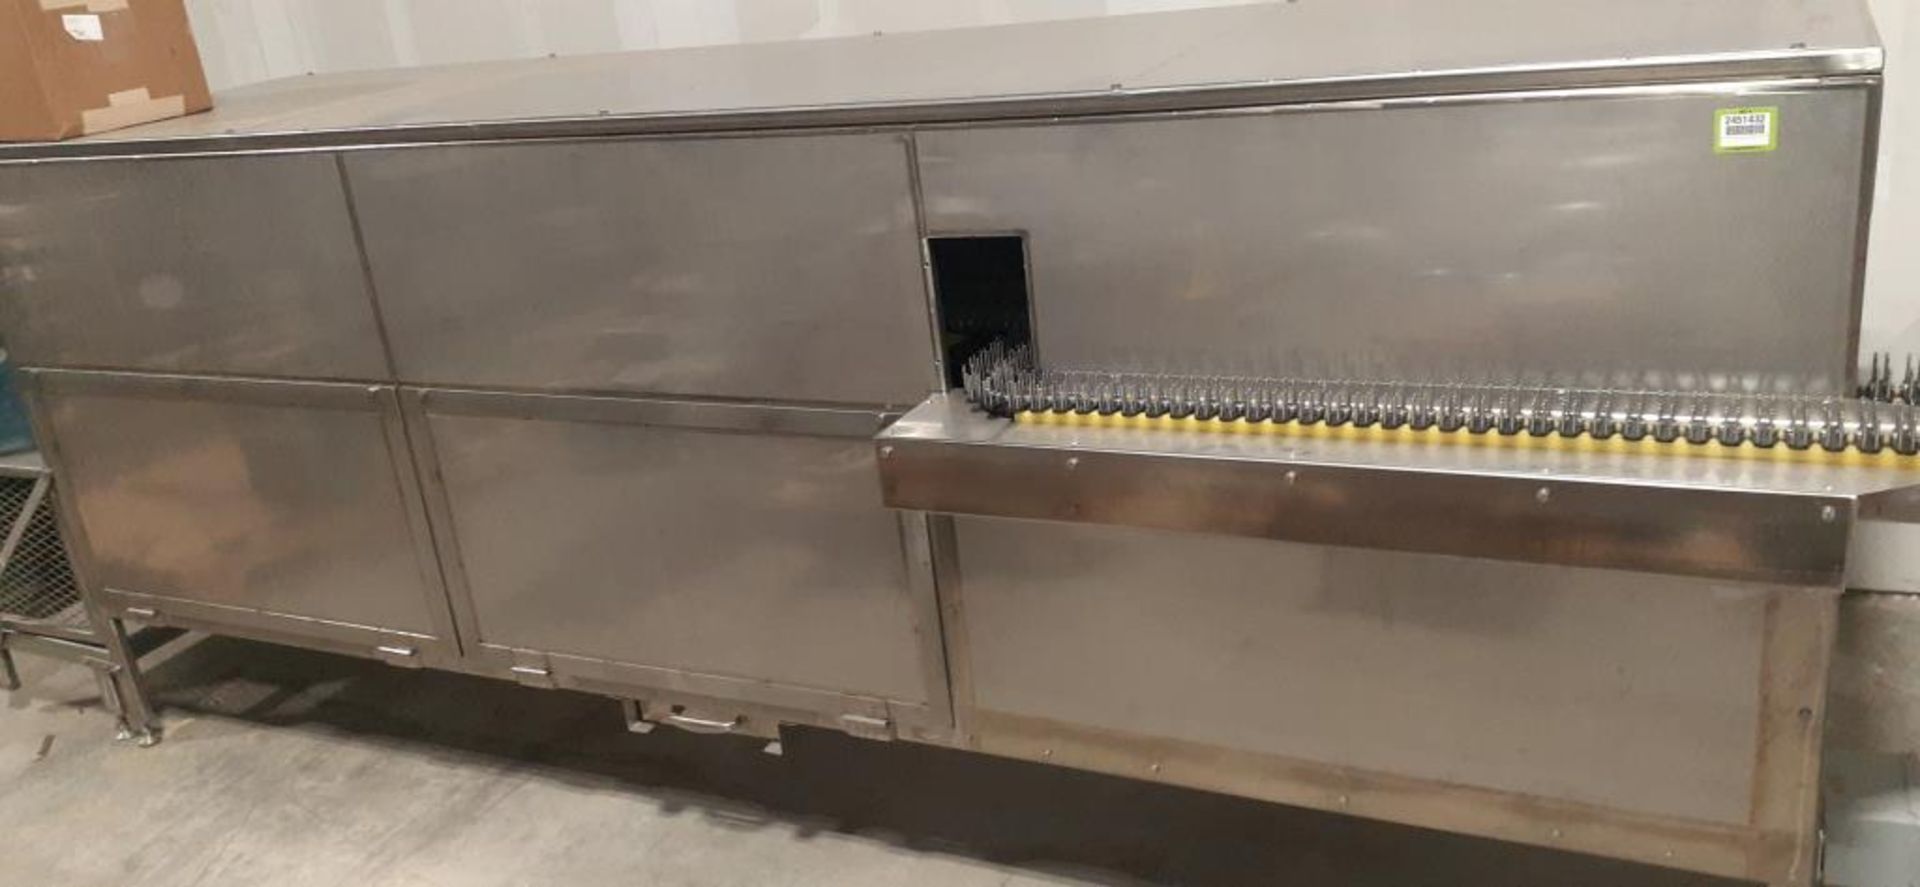 Refrigerator Conveyor - Image 7 of 7